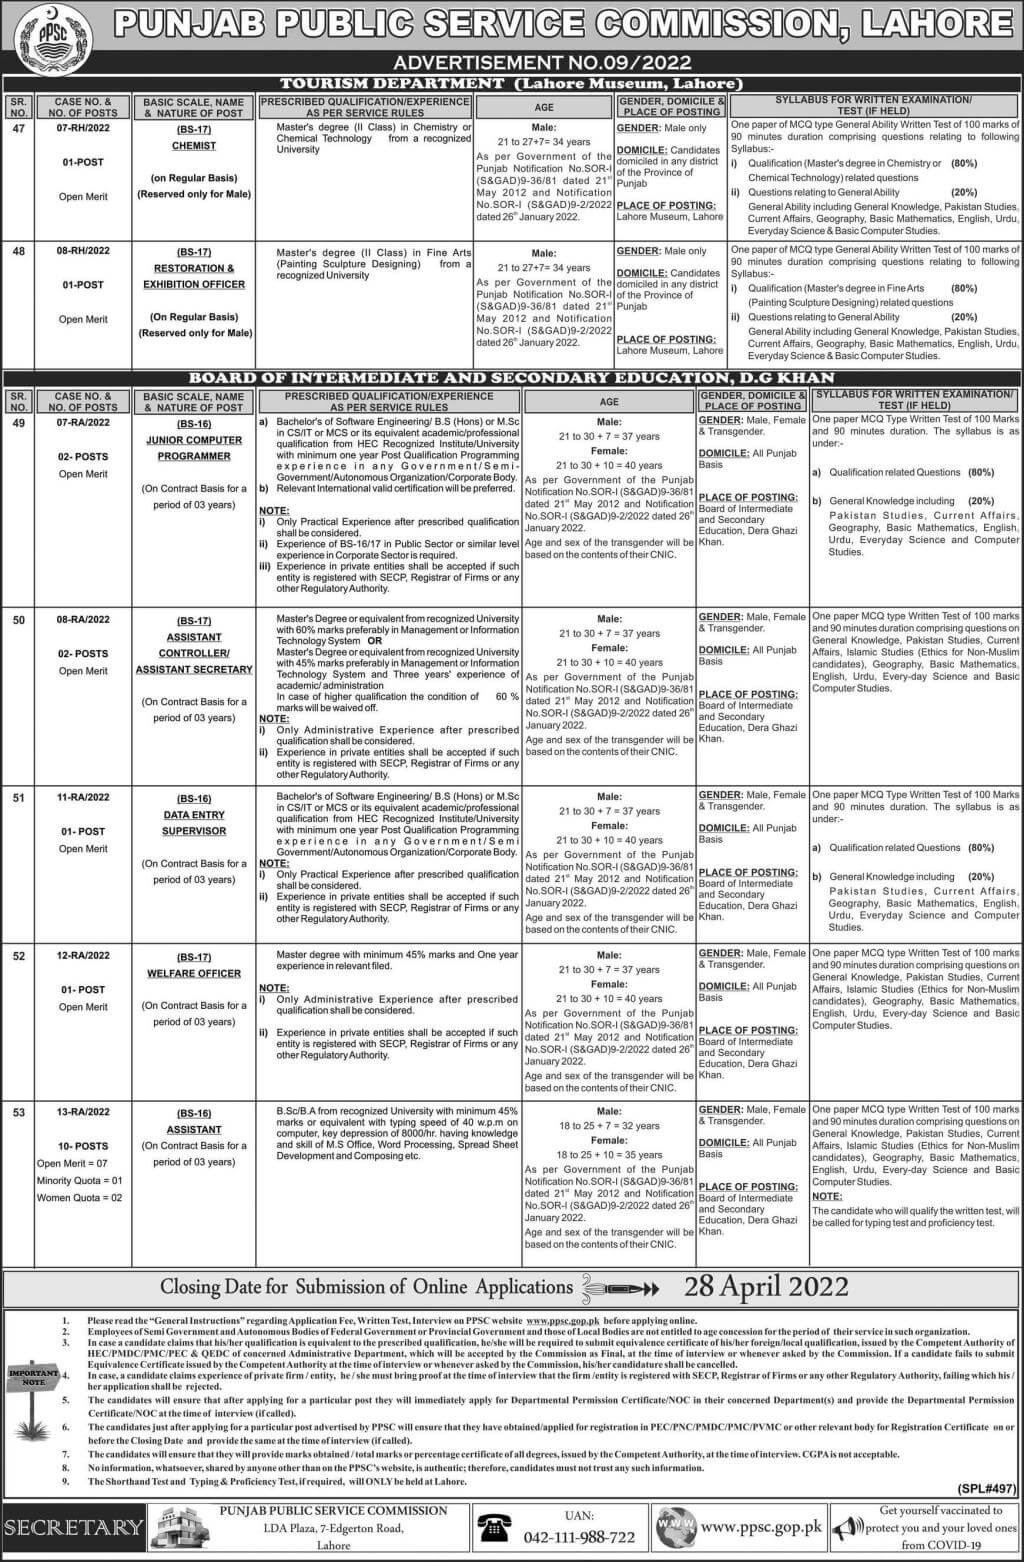 Punjab Public Service Commission Jobs in Punjab Adv no. 09/2022